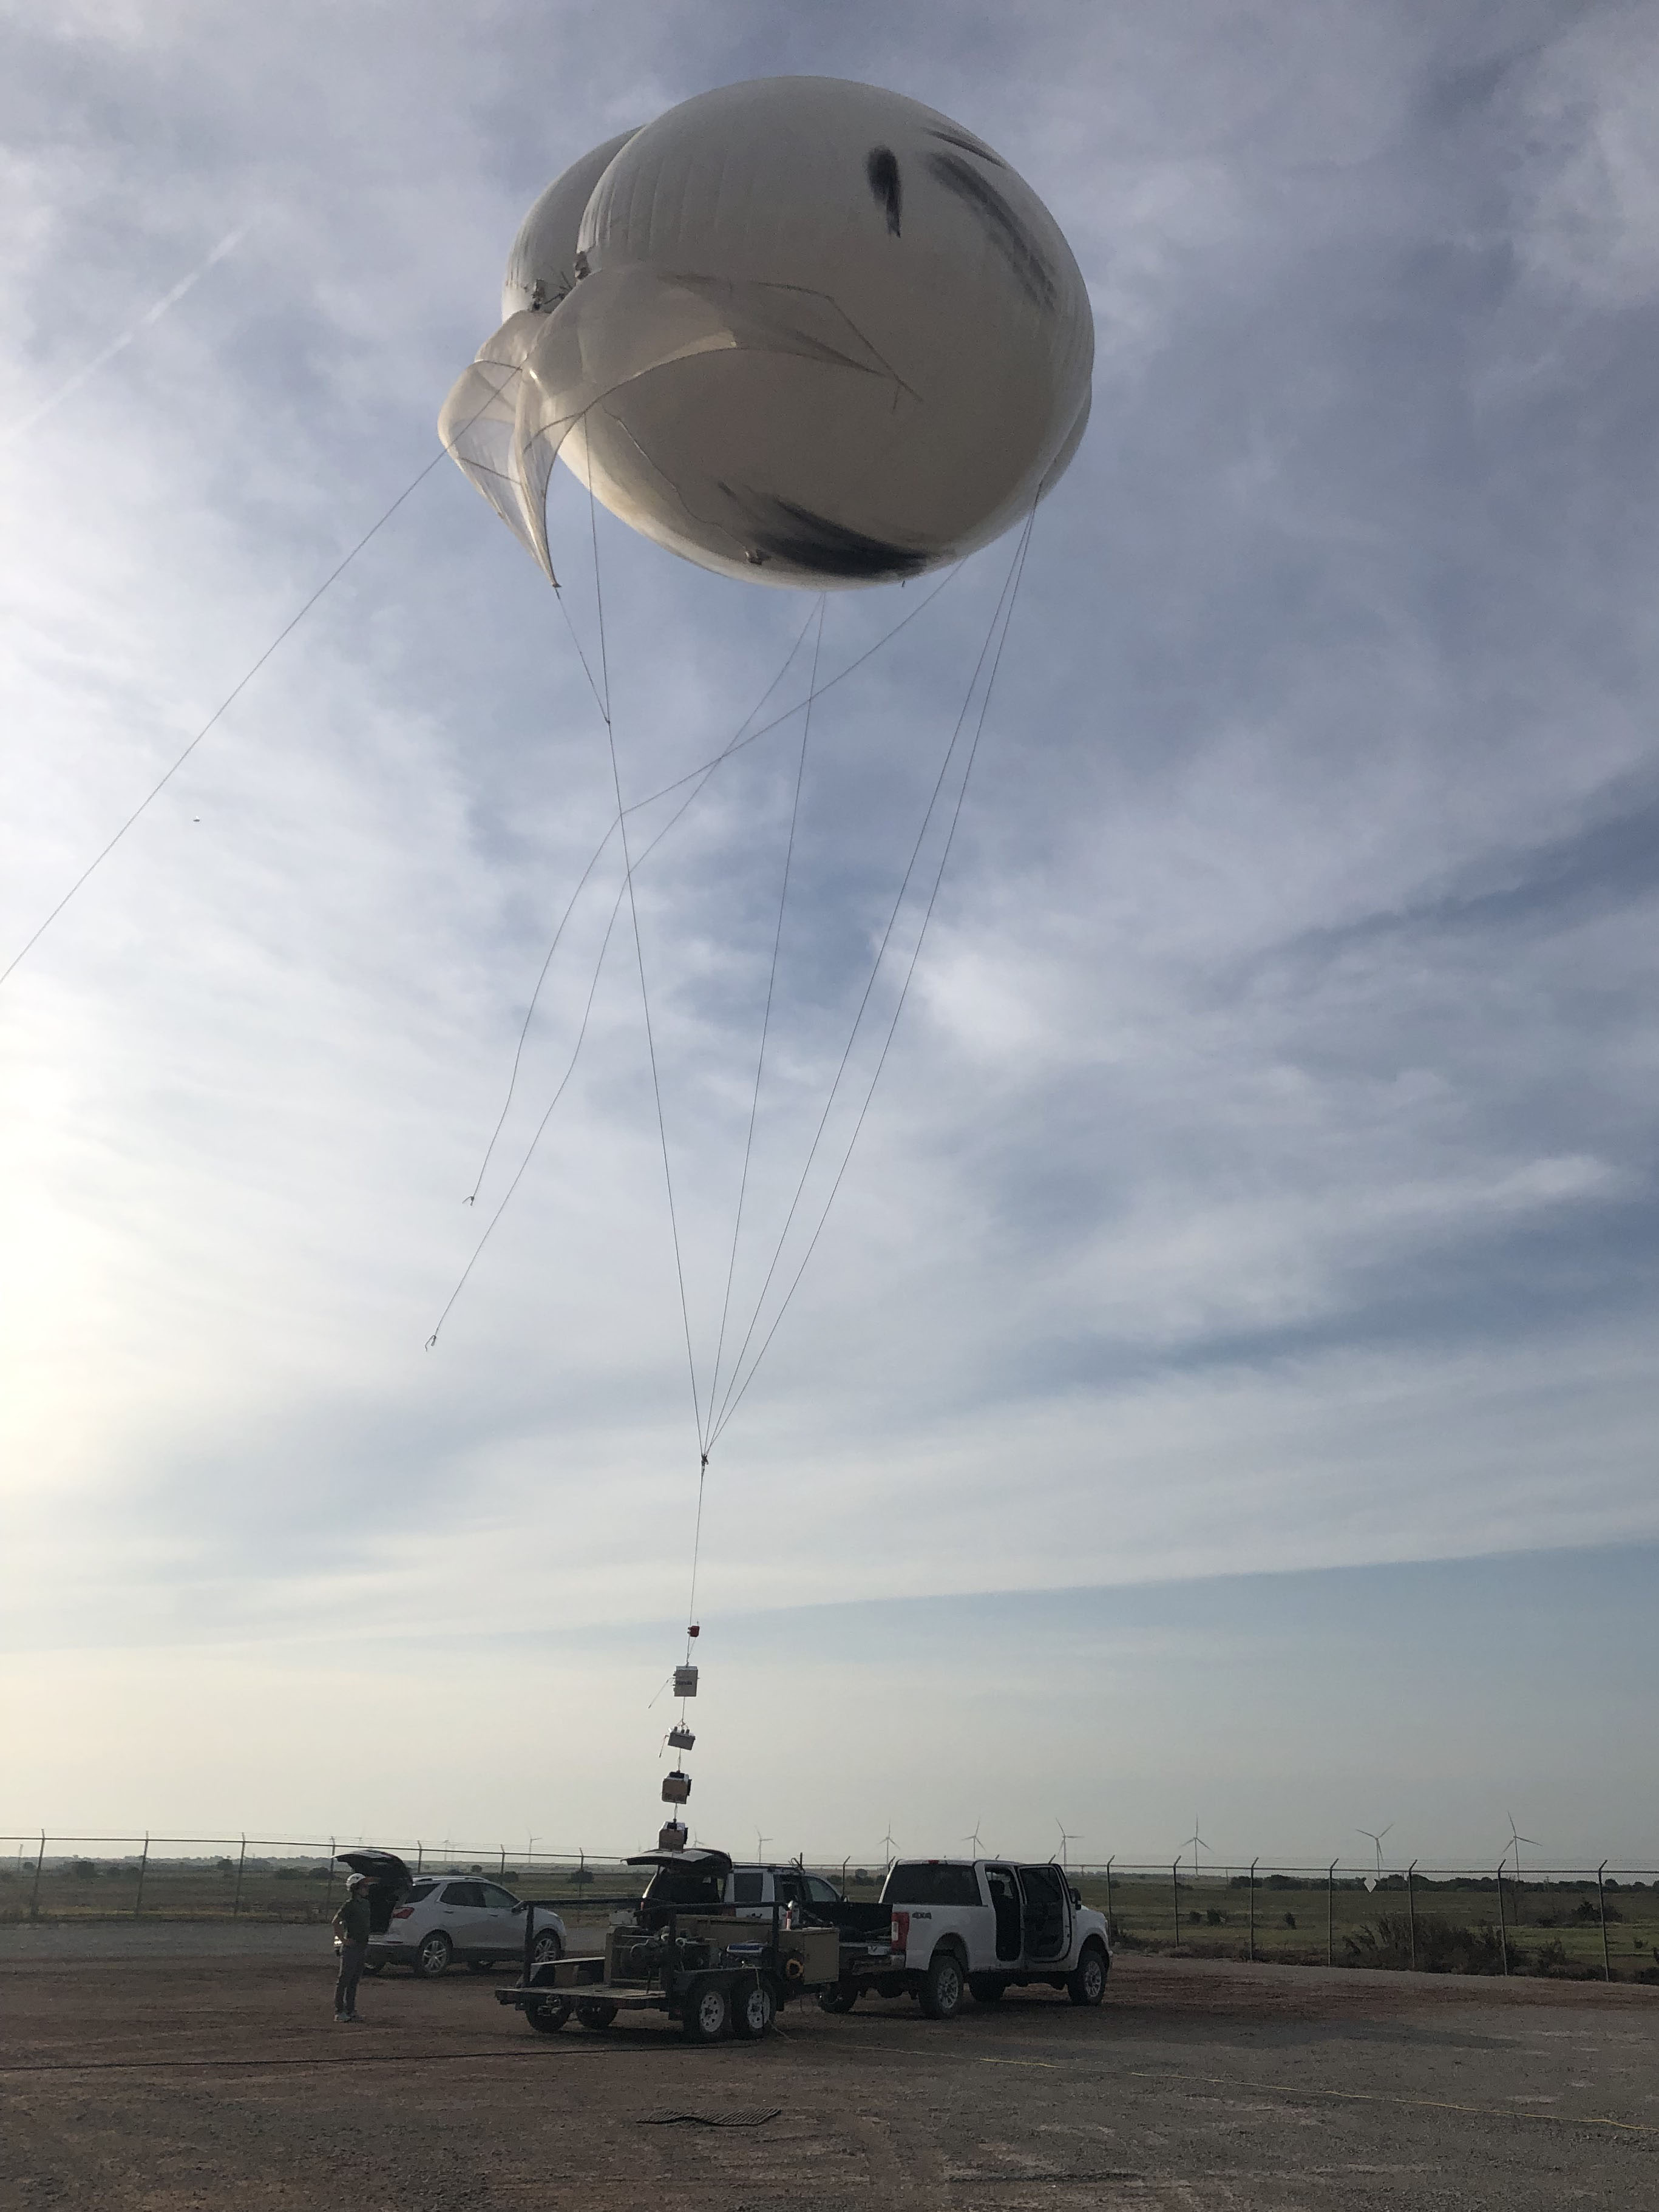 Tethered balloon at Southern Great Plains